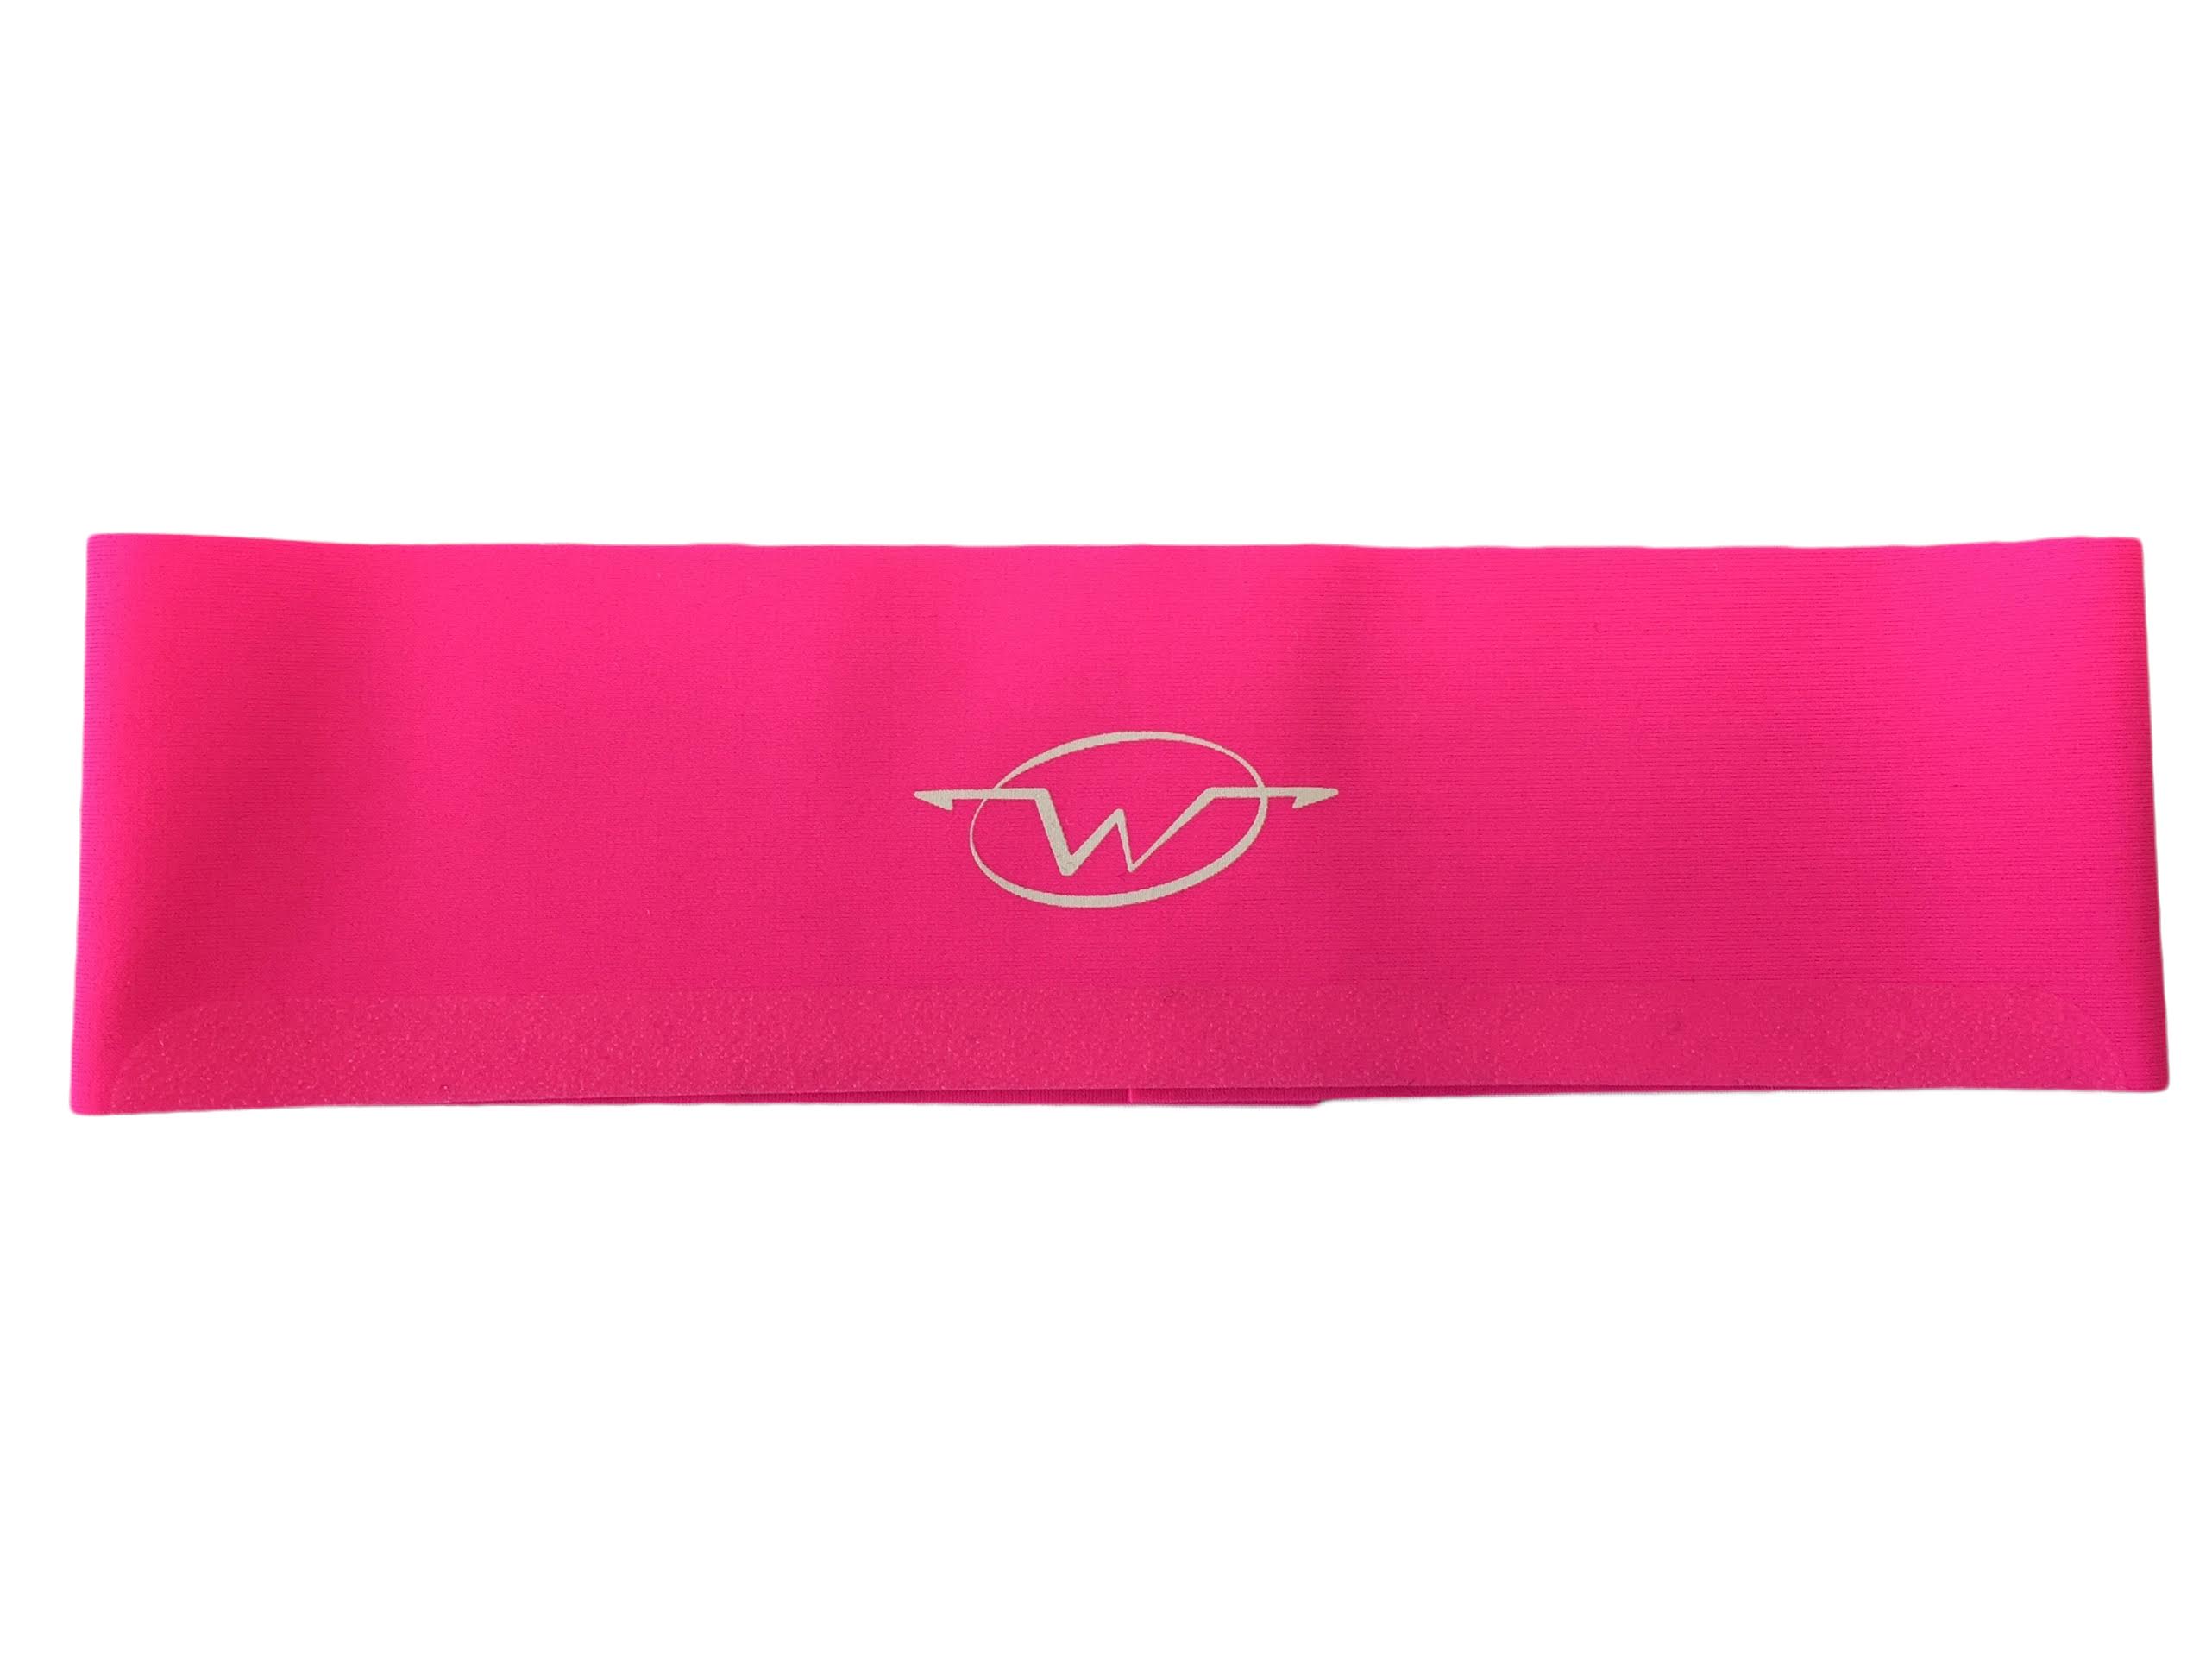 Pink performance headband by Wickflow